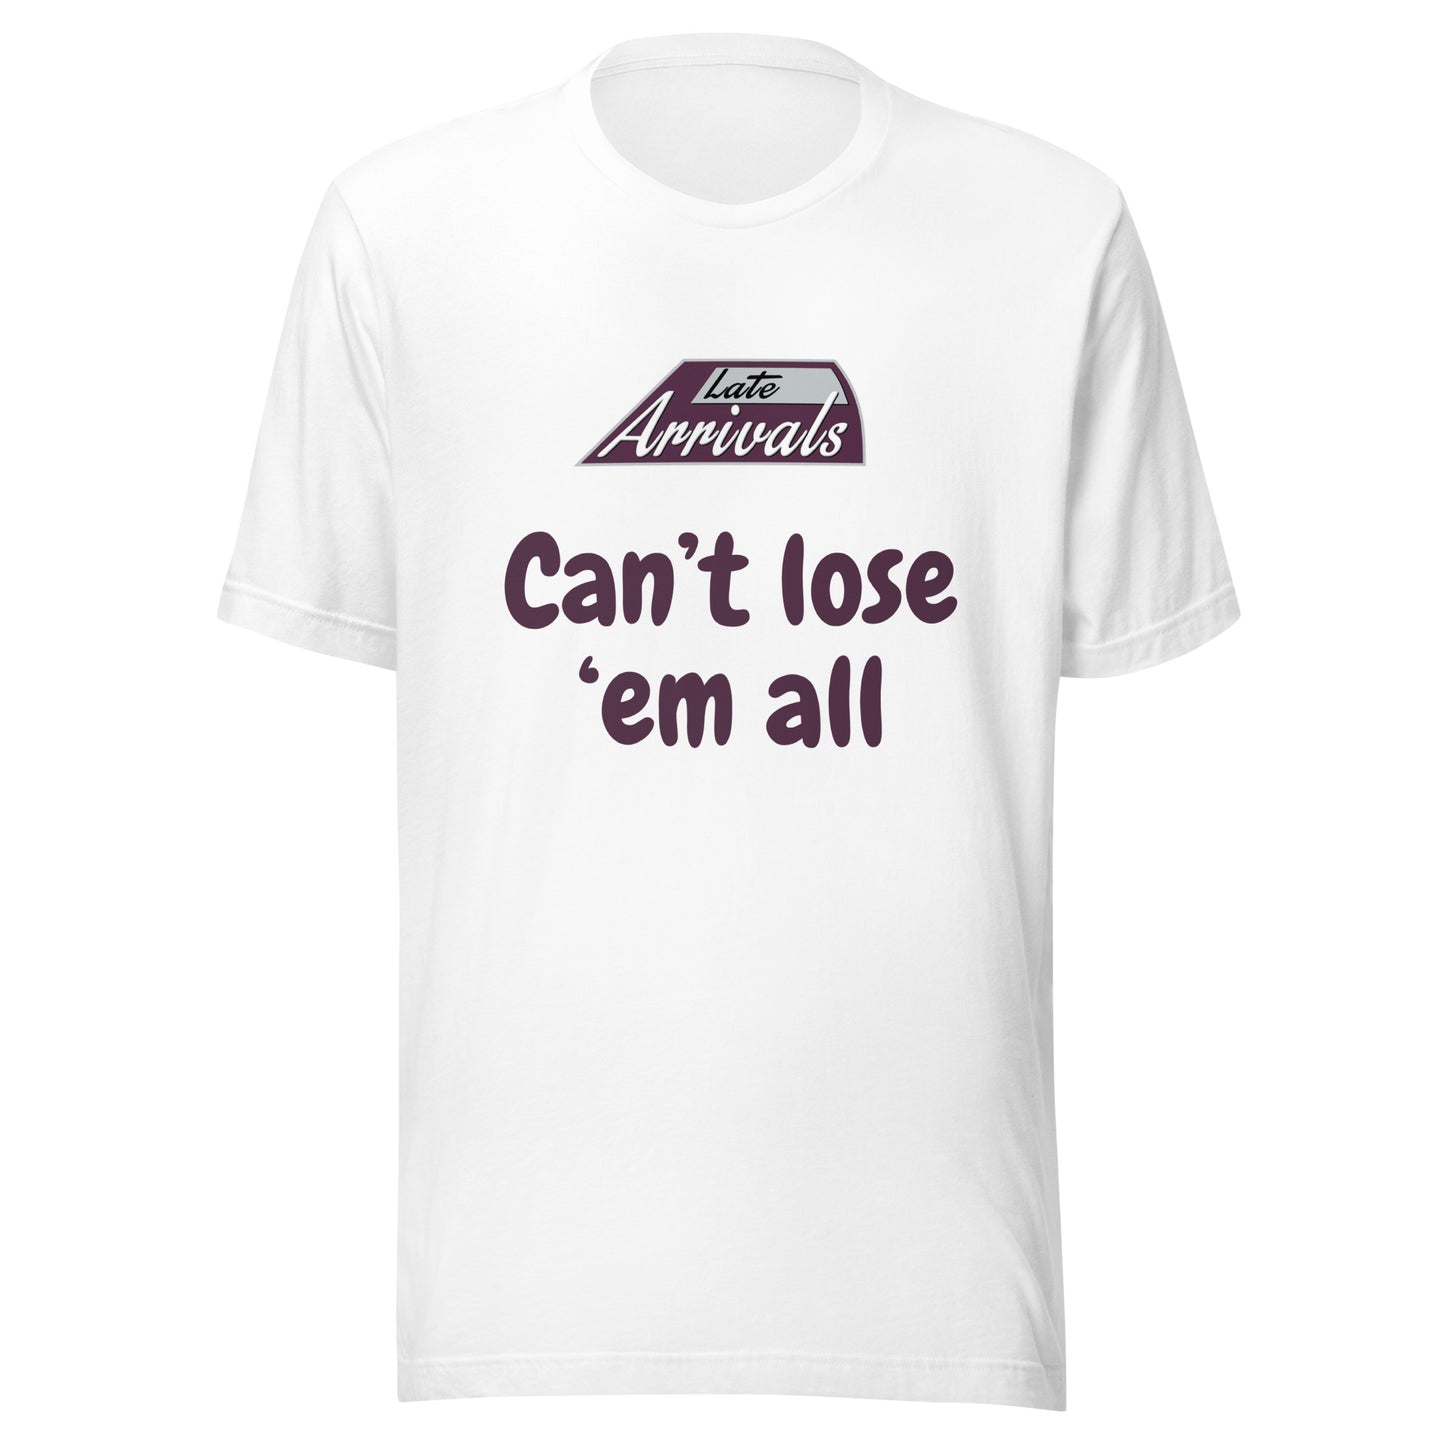 LAP Can't Win 'em All t-shirt